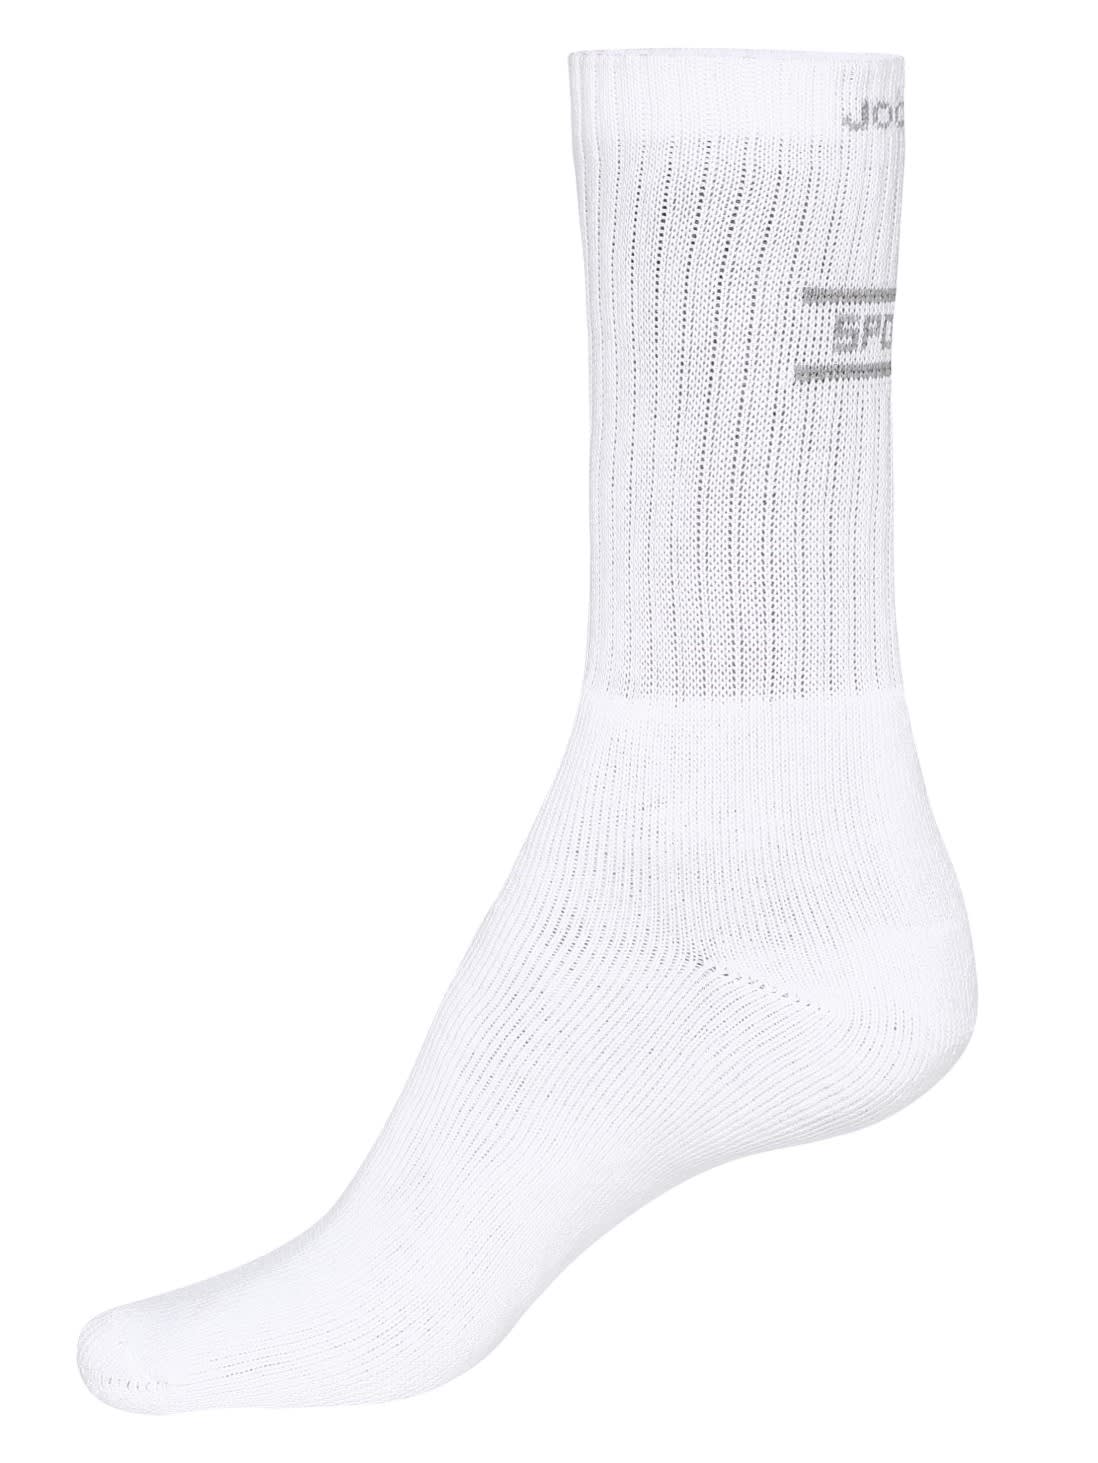 Buy Men Casual Socks Pack of 3 Socks 7030 White |Jockey India